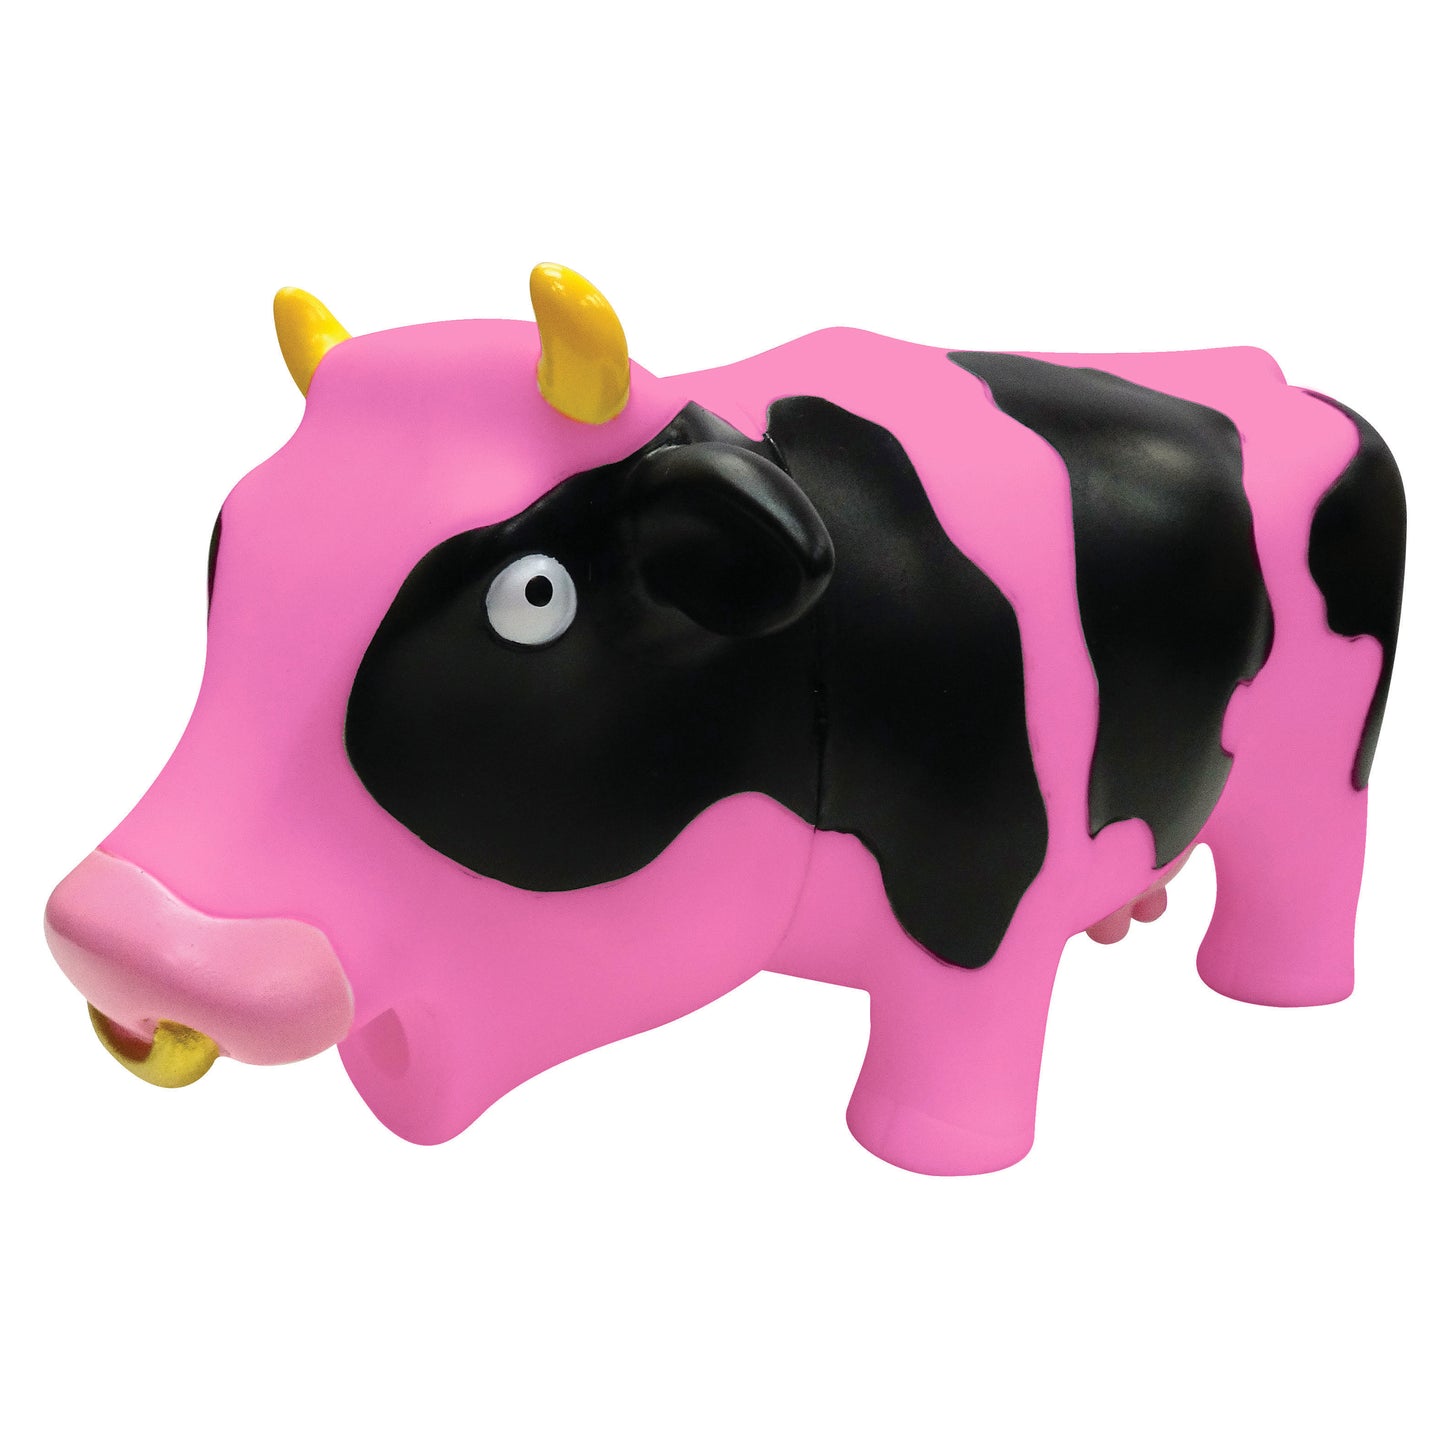 6 Pack - Squeeze Me Cow (Medium/Random Color)